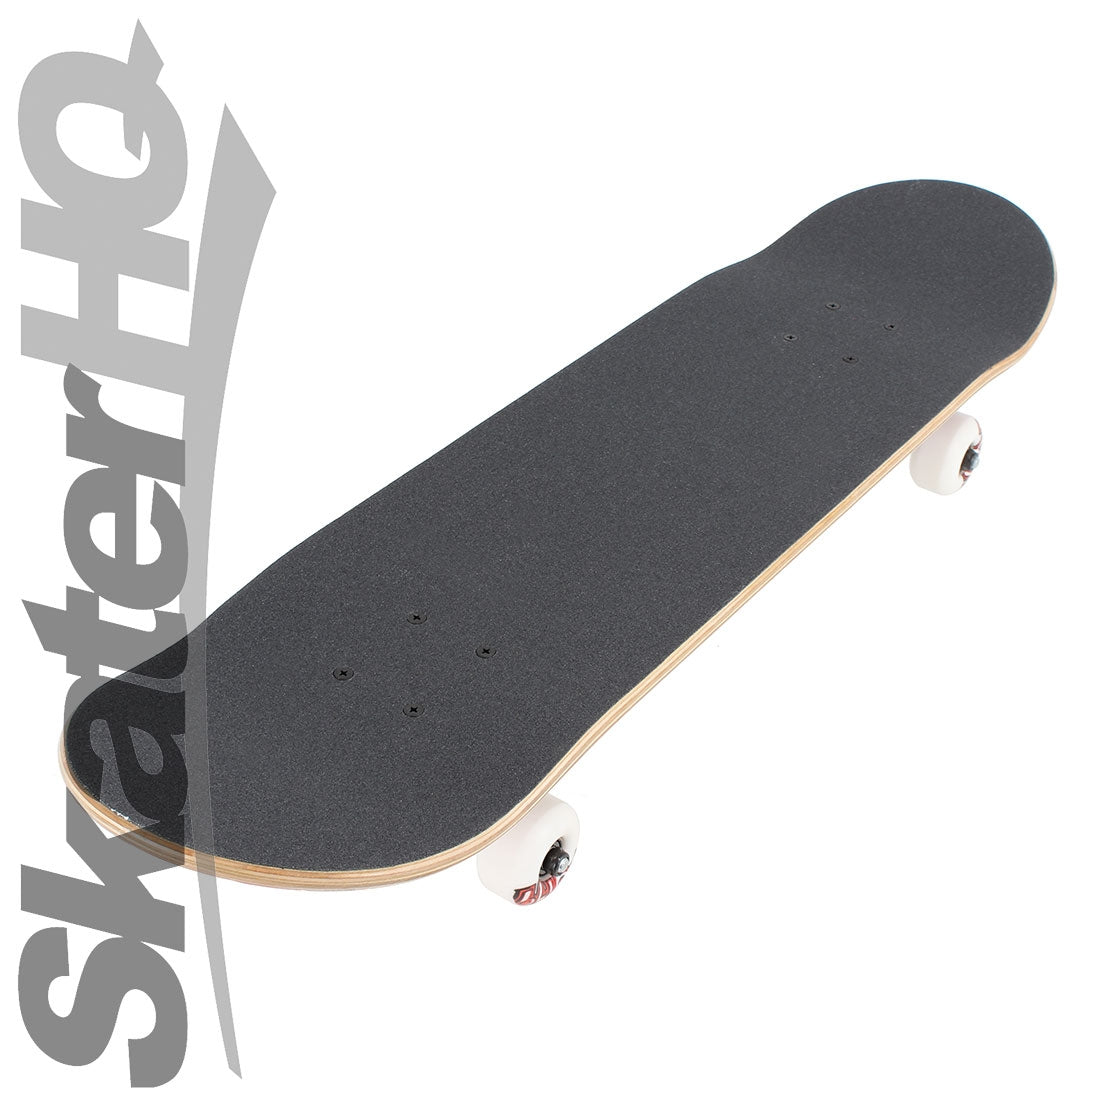 Blind Heady Tiedye 7.7 Complete Skateboard Completes Modern Street